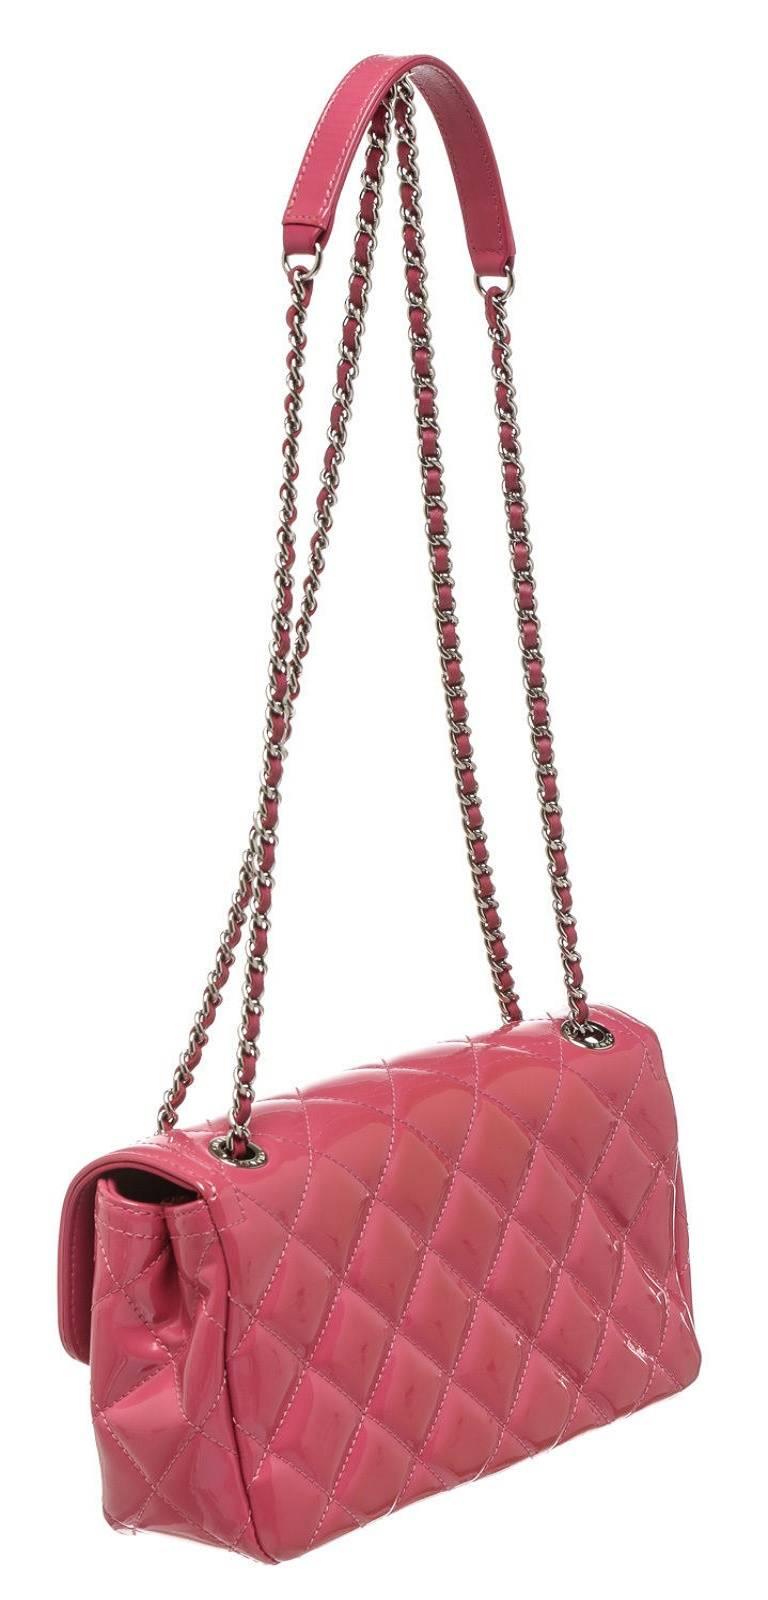 Chanel Pink Quilted Patent Leather Flap Shoulder Handbag For Sale 1